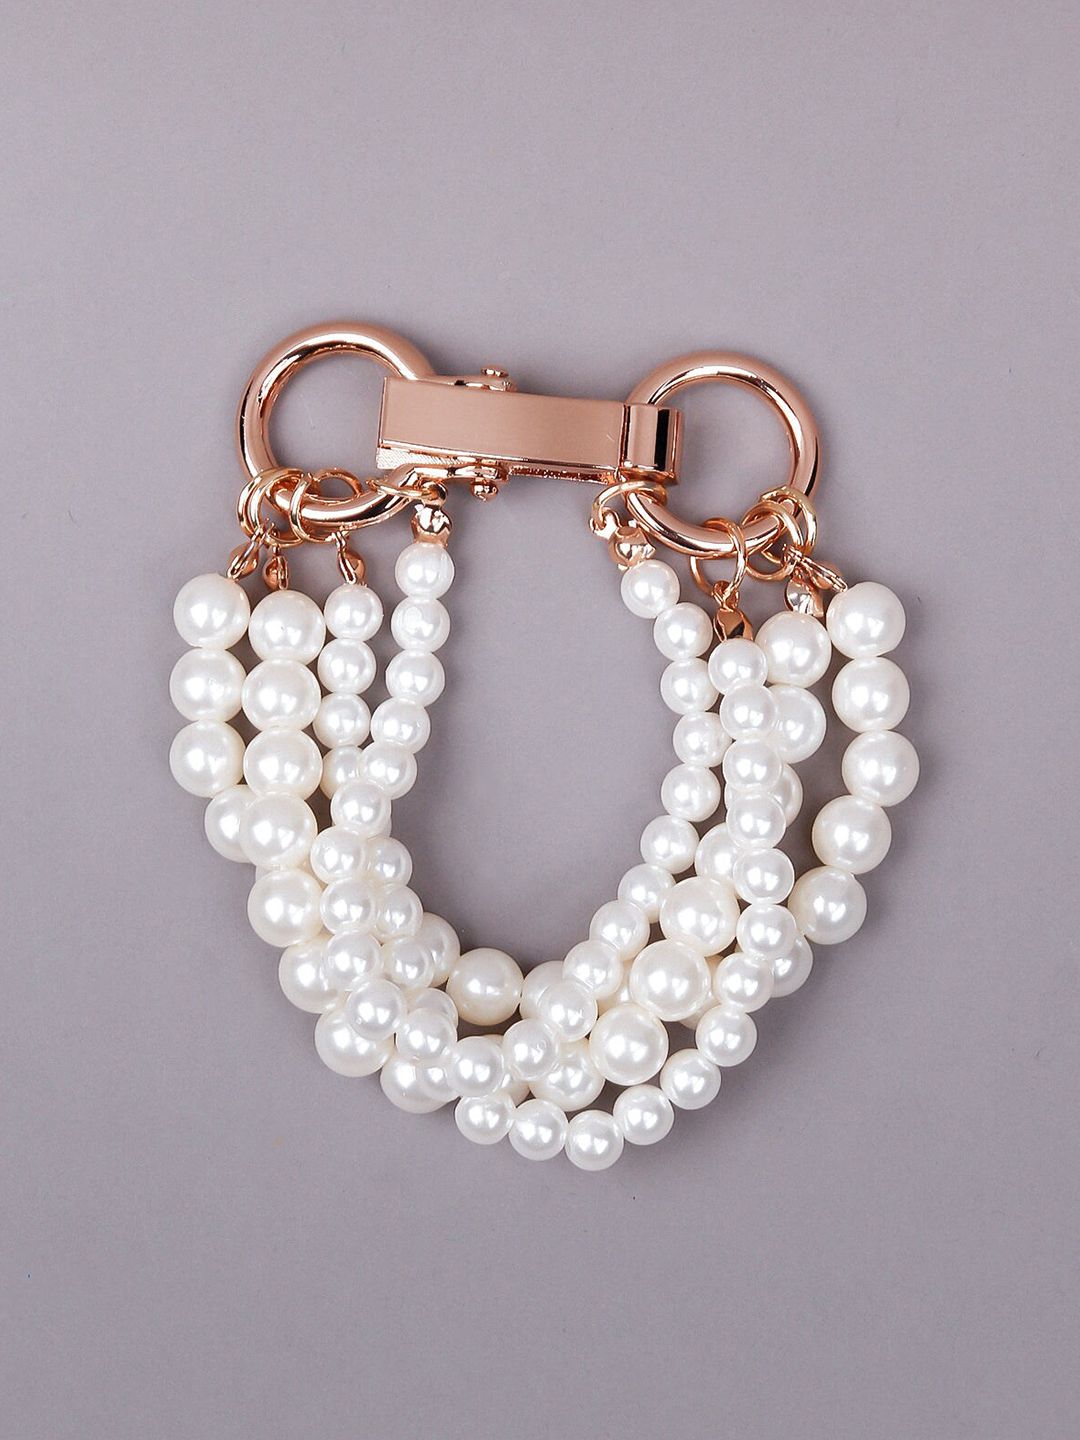 ODETTE Women White & Copper-Toned Armlet Bracelet Price in India